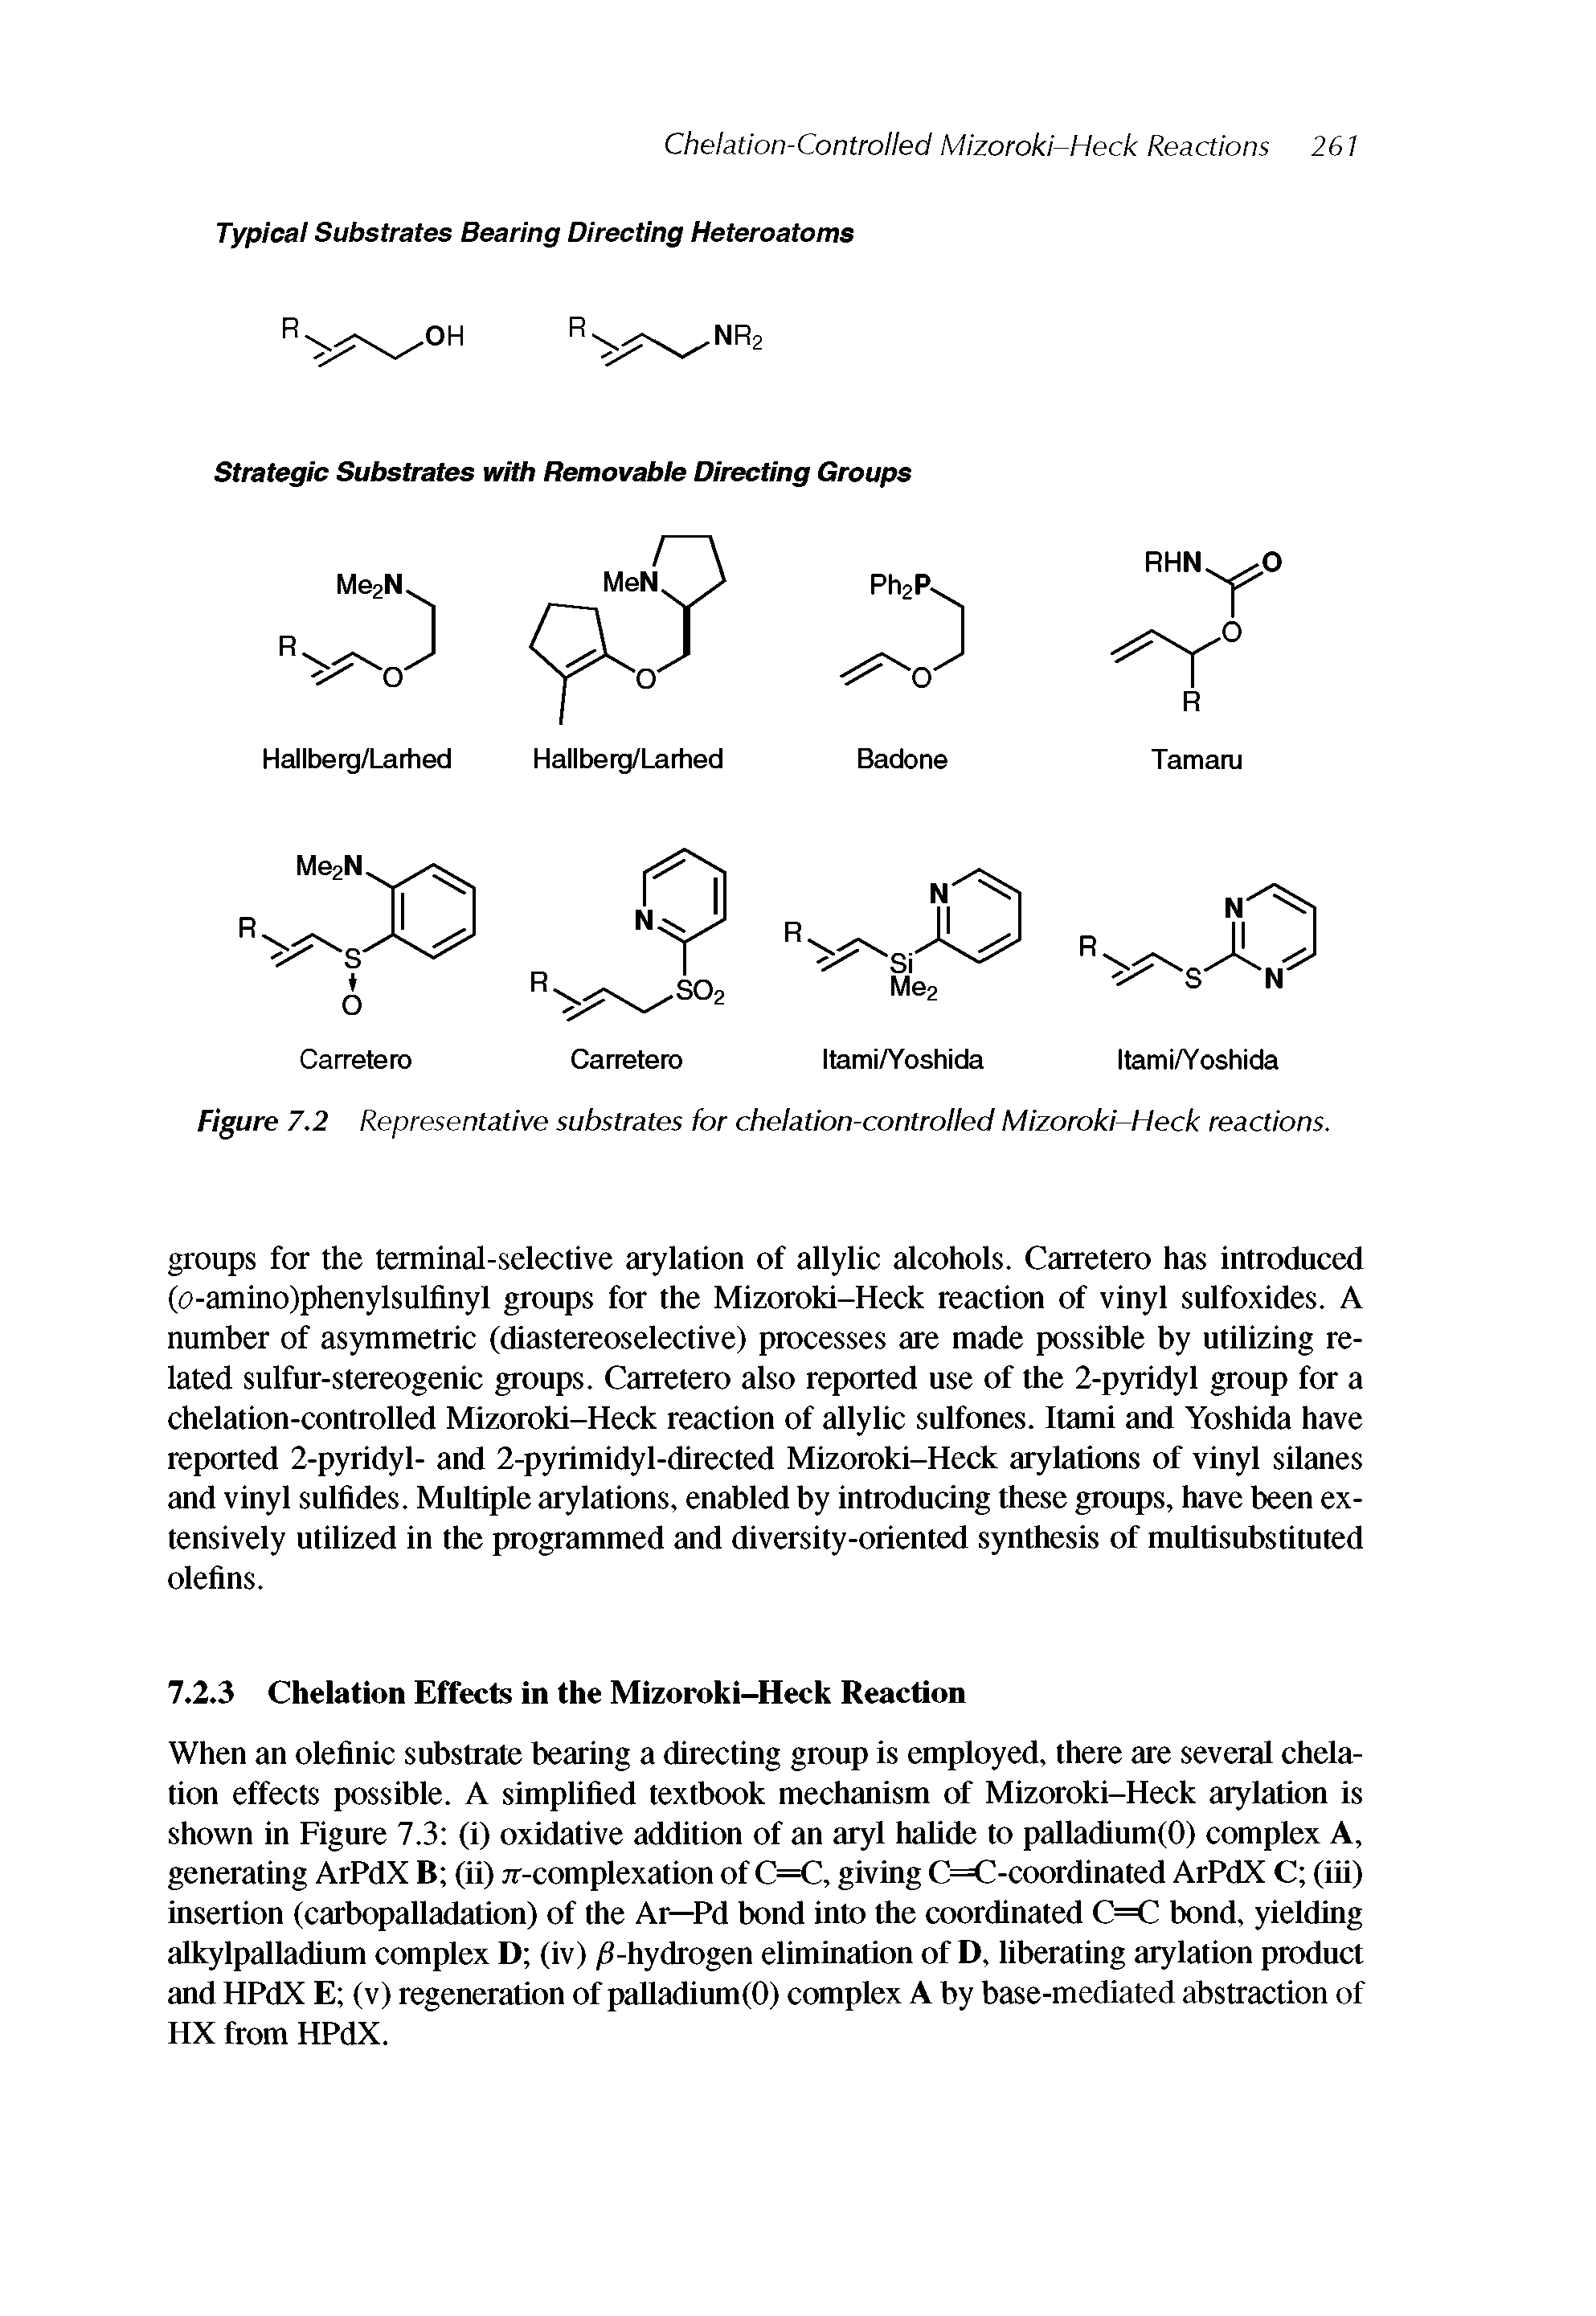 Figure 7.2 Representative substrates for chelation-controlled Mizoroki-Heck reactions.